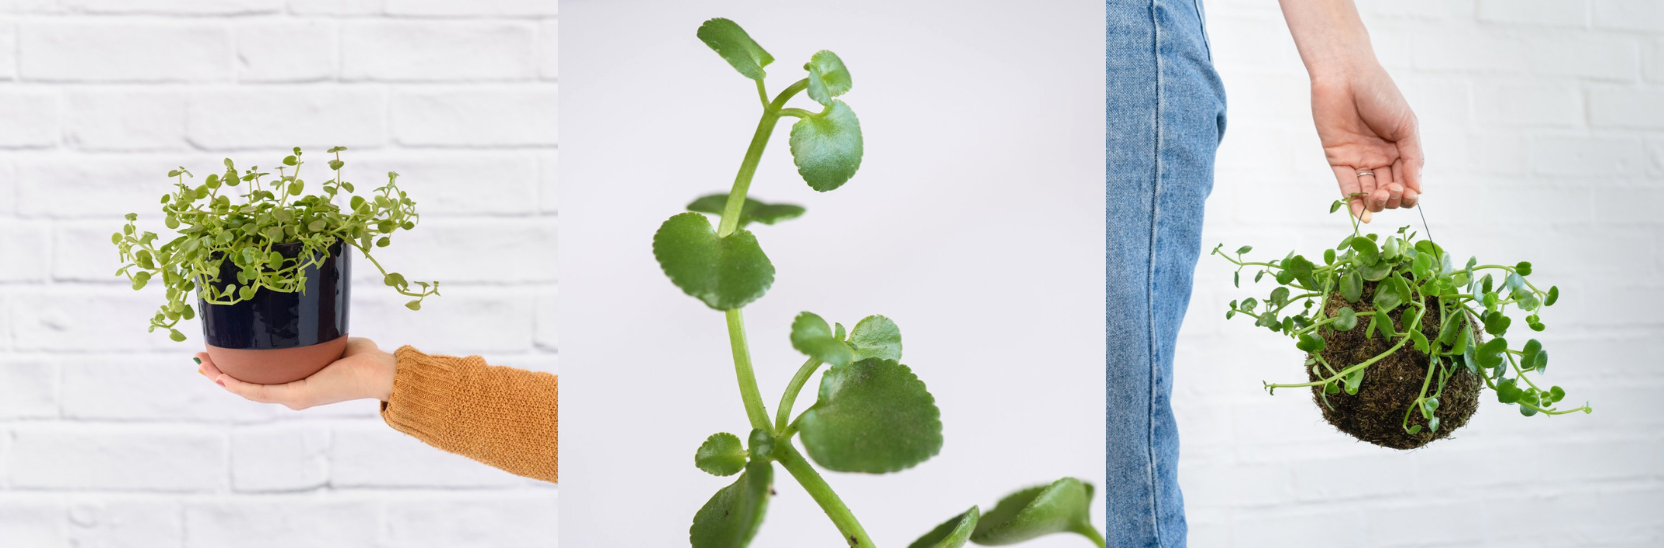 20 Fast Growing Indoor Plants - Dainty Crassula